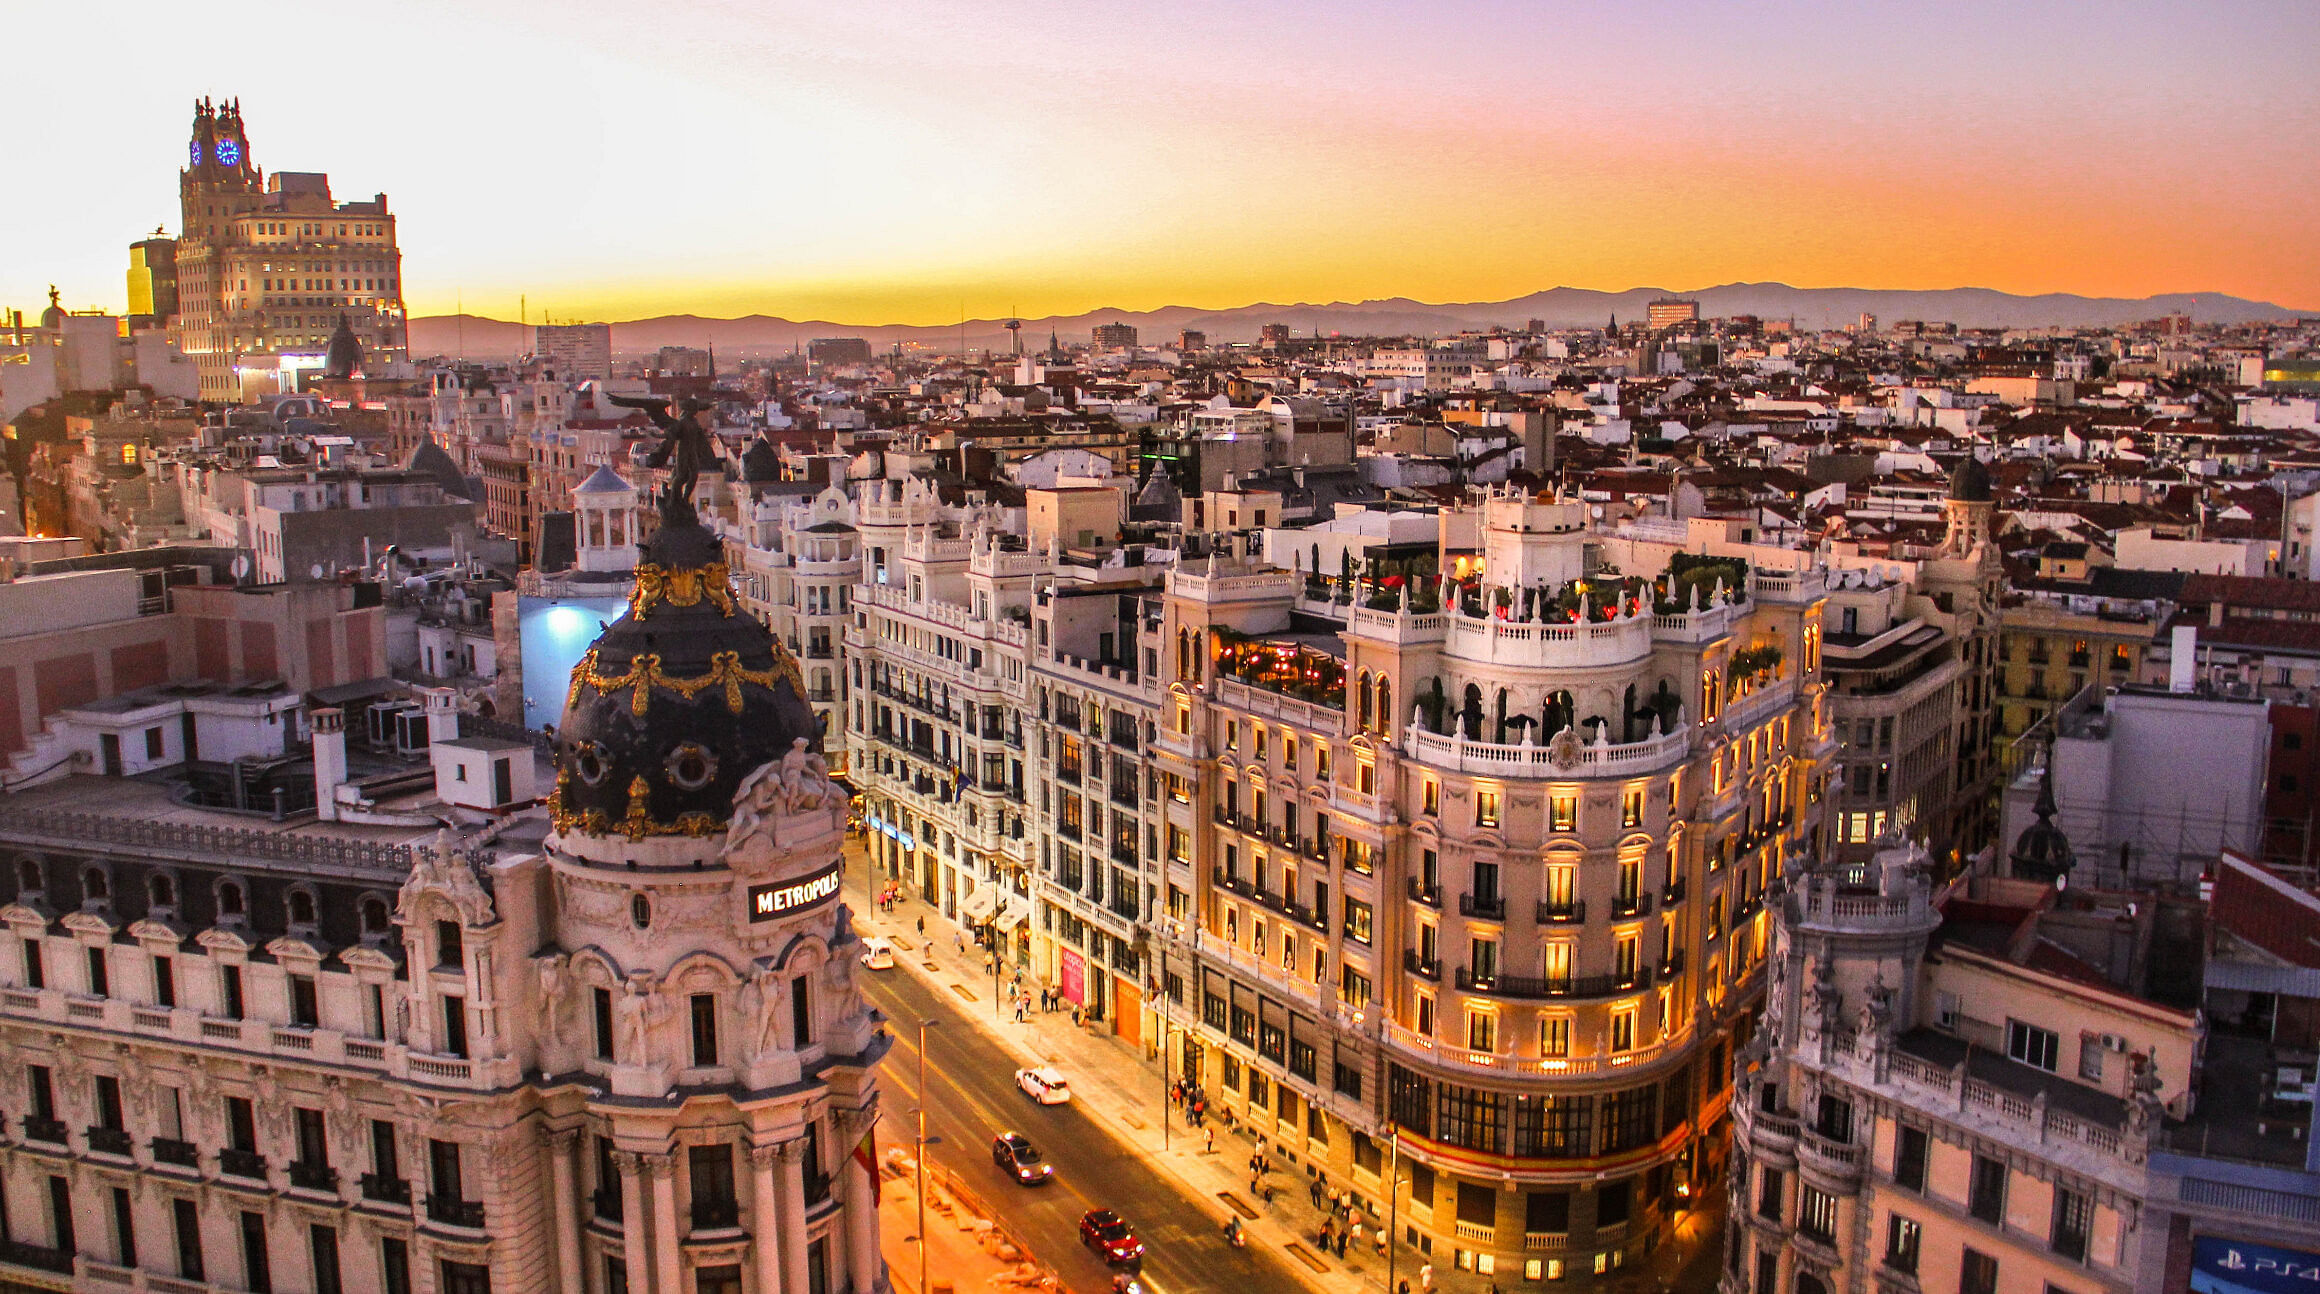 Sunset over Gran Via in Madrid